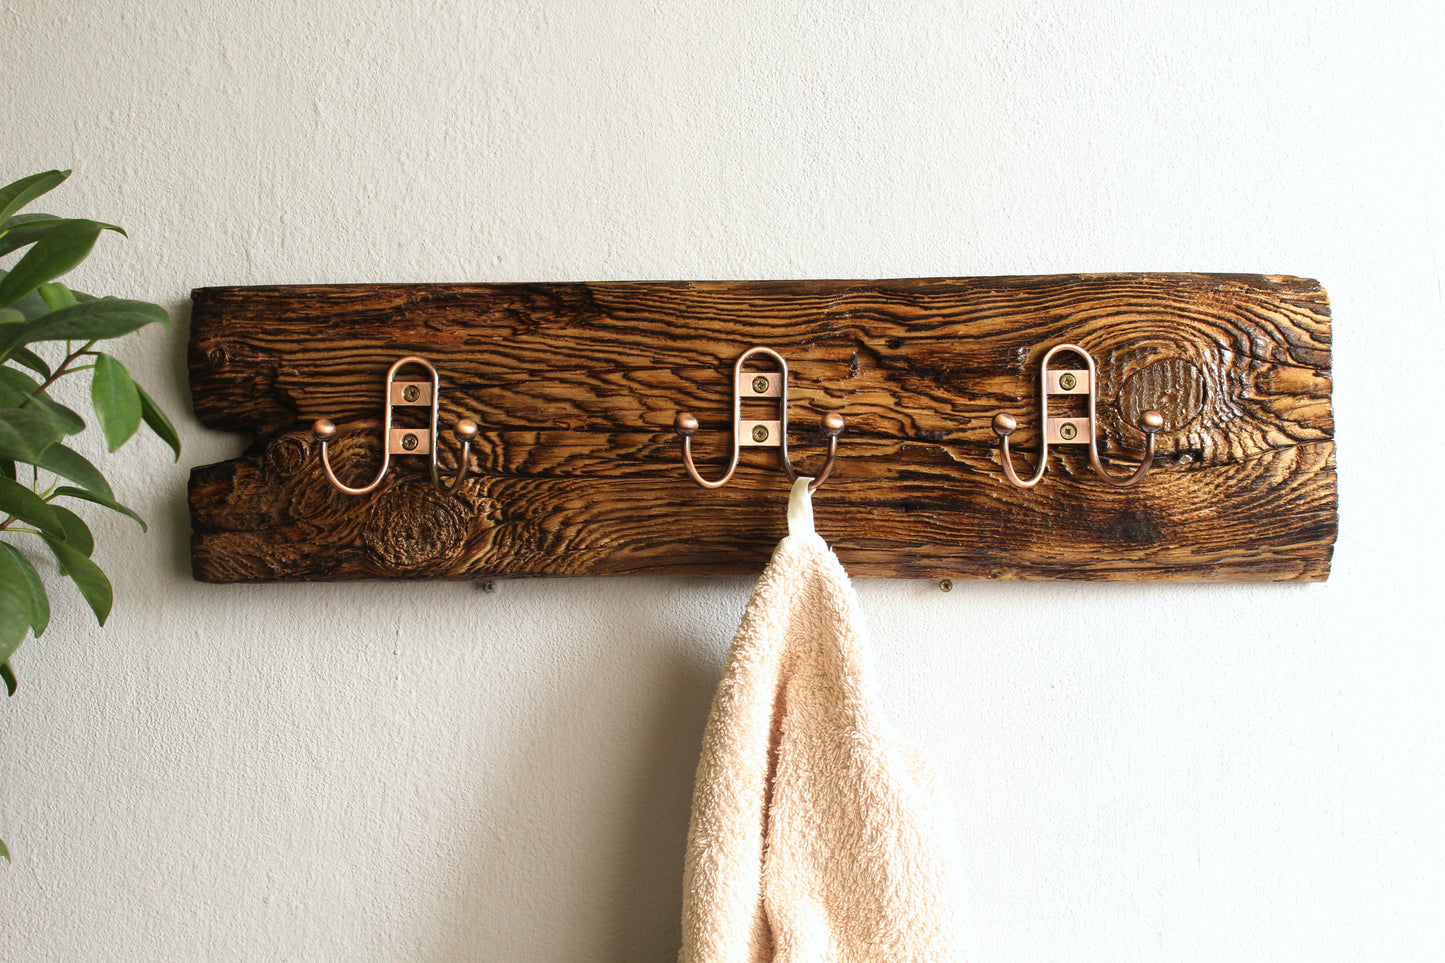 Rustic reclaimed wood coat rack, Entry Coat Rack with 3 vintage style hooks